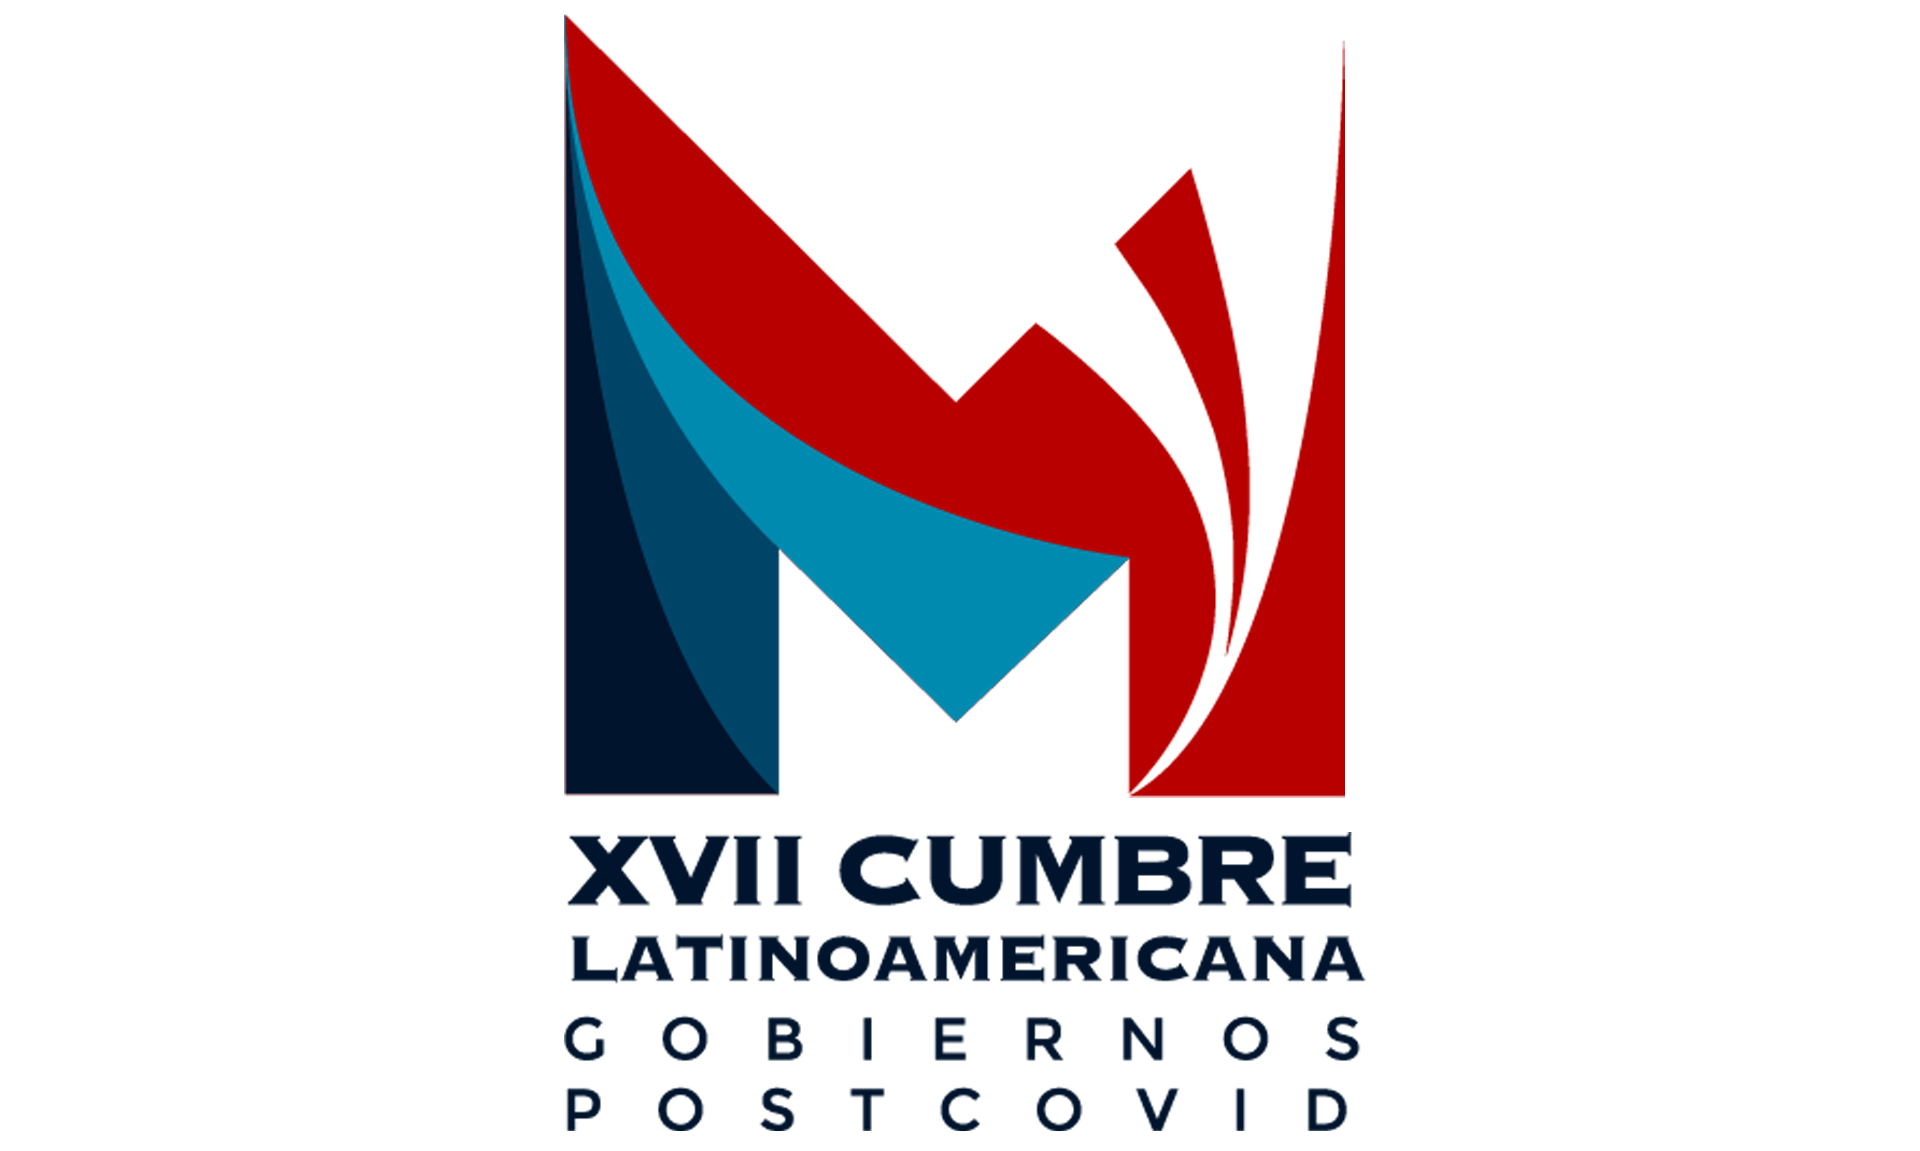 XVII Cumbre Latinoamericana Gobiernos Post Covid logo